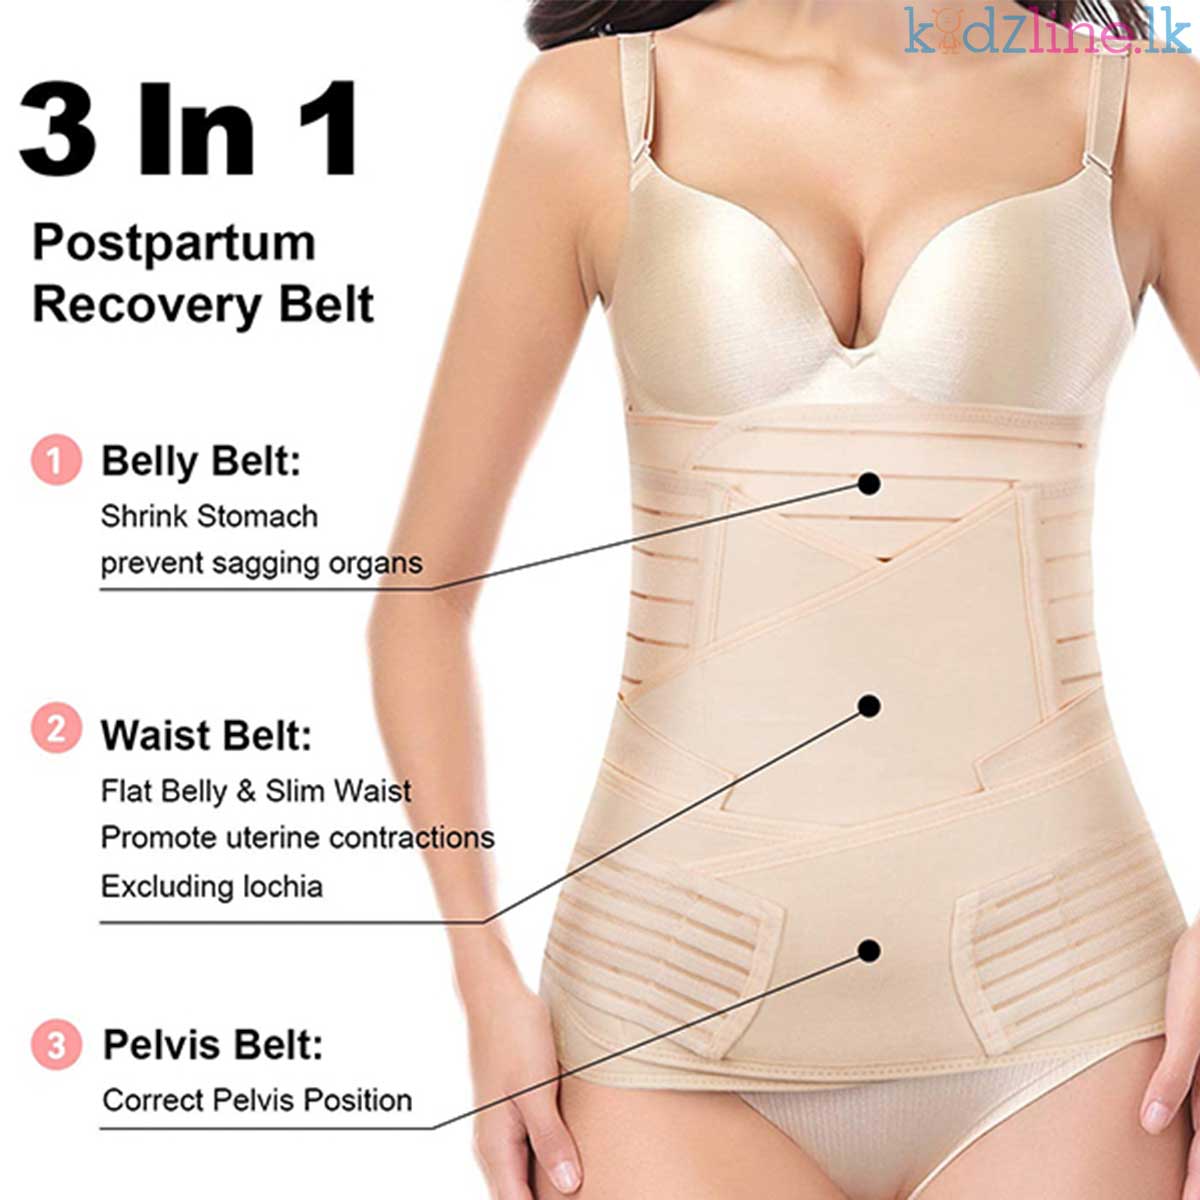 3 in 1 Post Pregnancy Belt for Belly, Waist & Pelvis Slimming